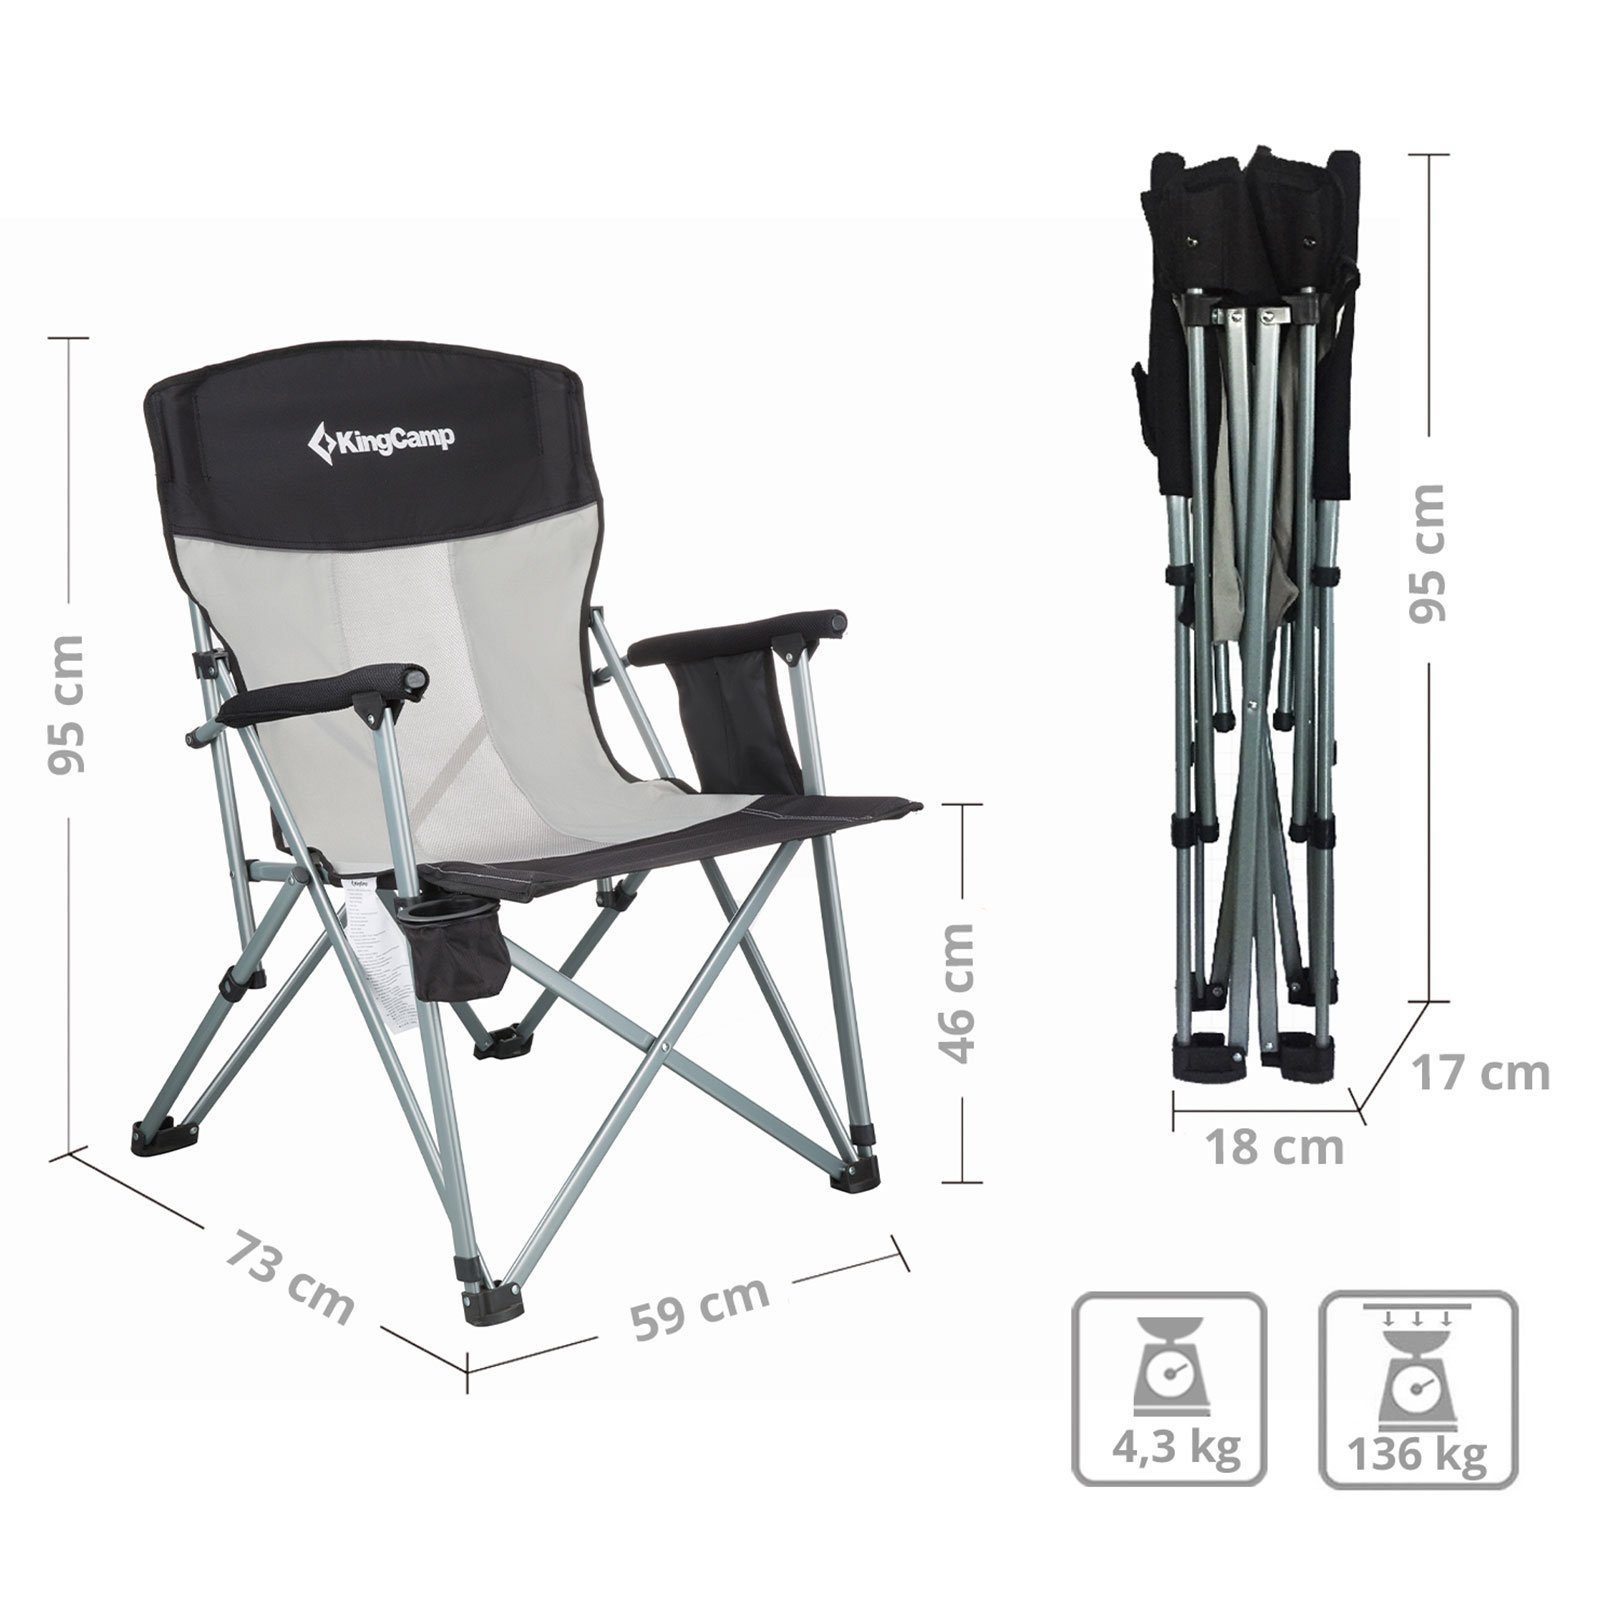 XL Armlehne KingCamp Grey Stuhl Falt 136 Campingstuhl Outdoor Camping Stahl Sessel Klapp kg Black/Light Garten,